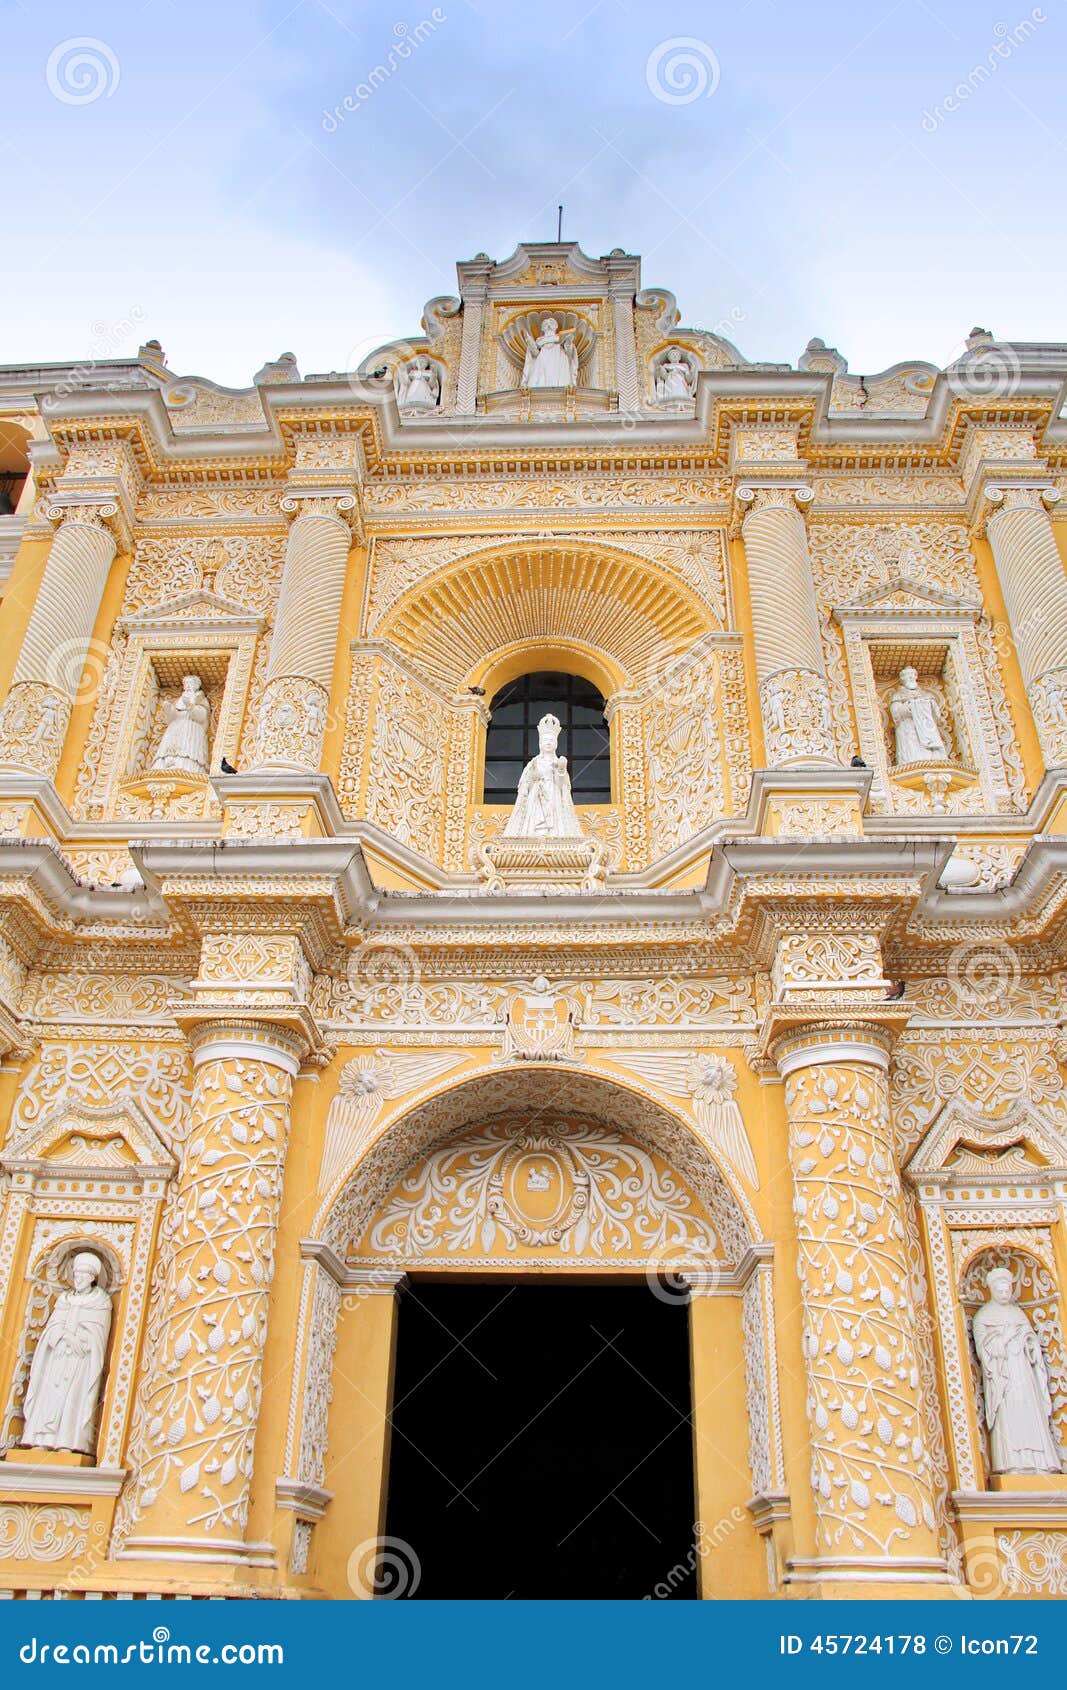 antigua, guatemala: la merced church, built in 1767, following g